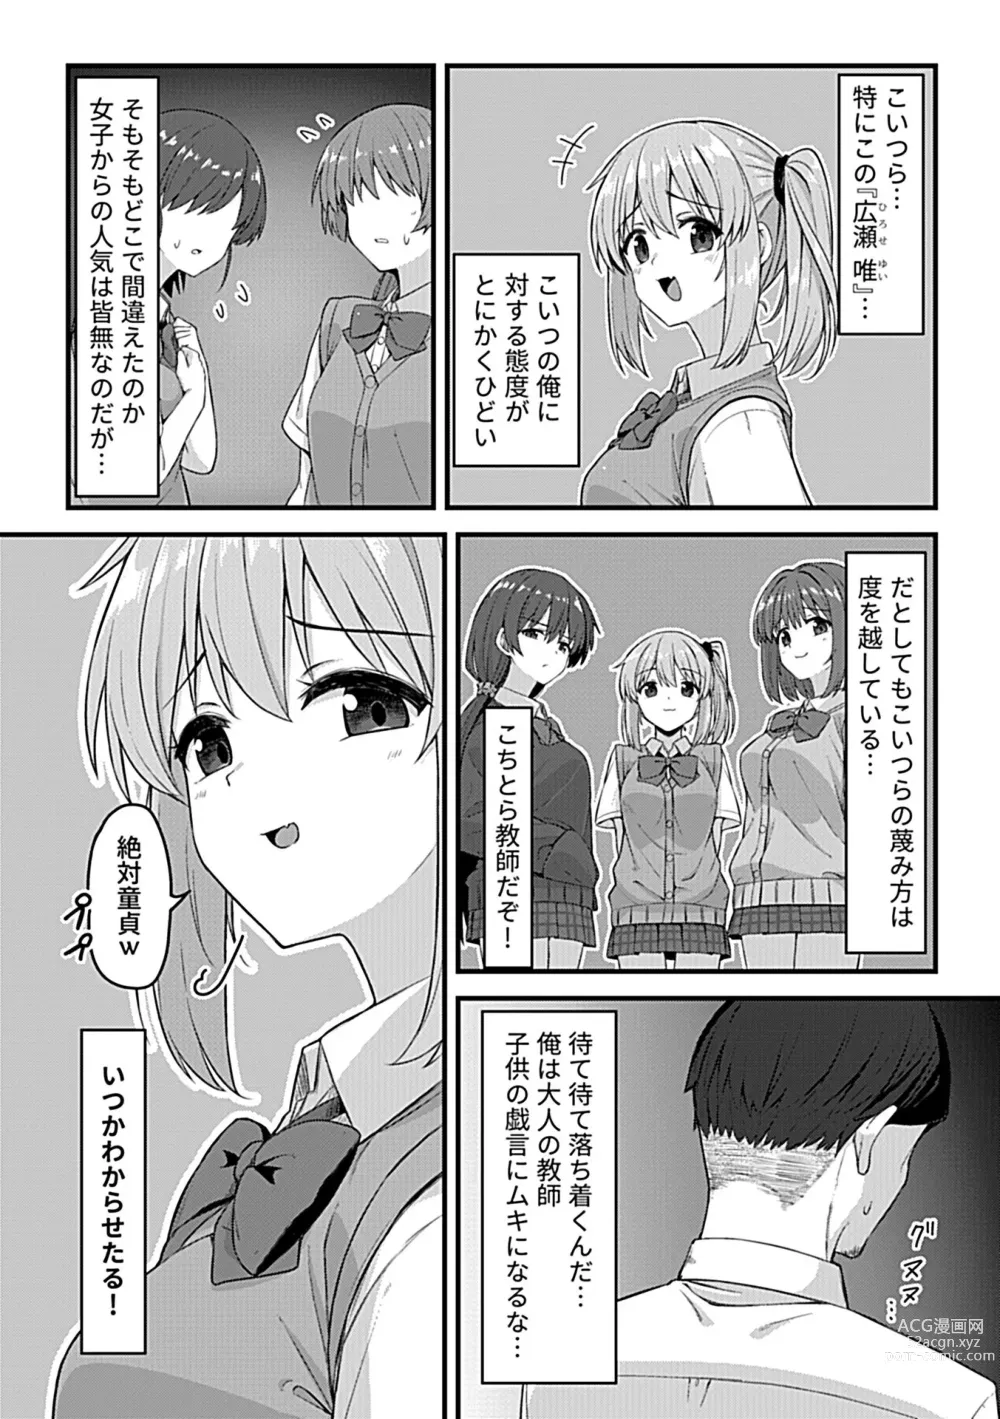 Page 122 of manga COMIC GEE vol.26